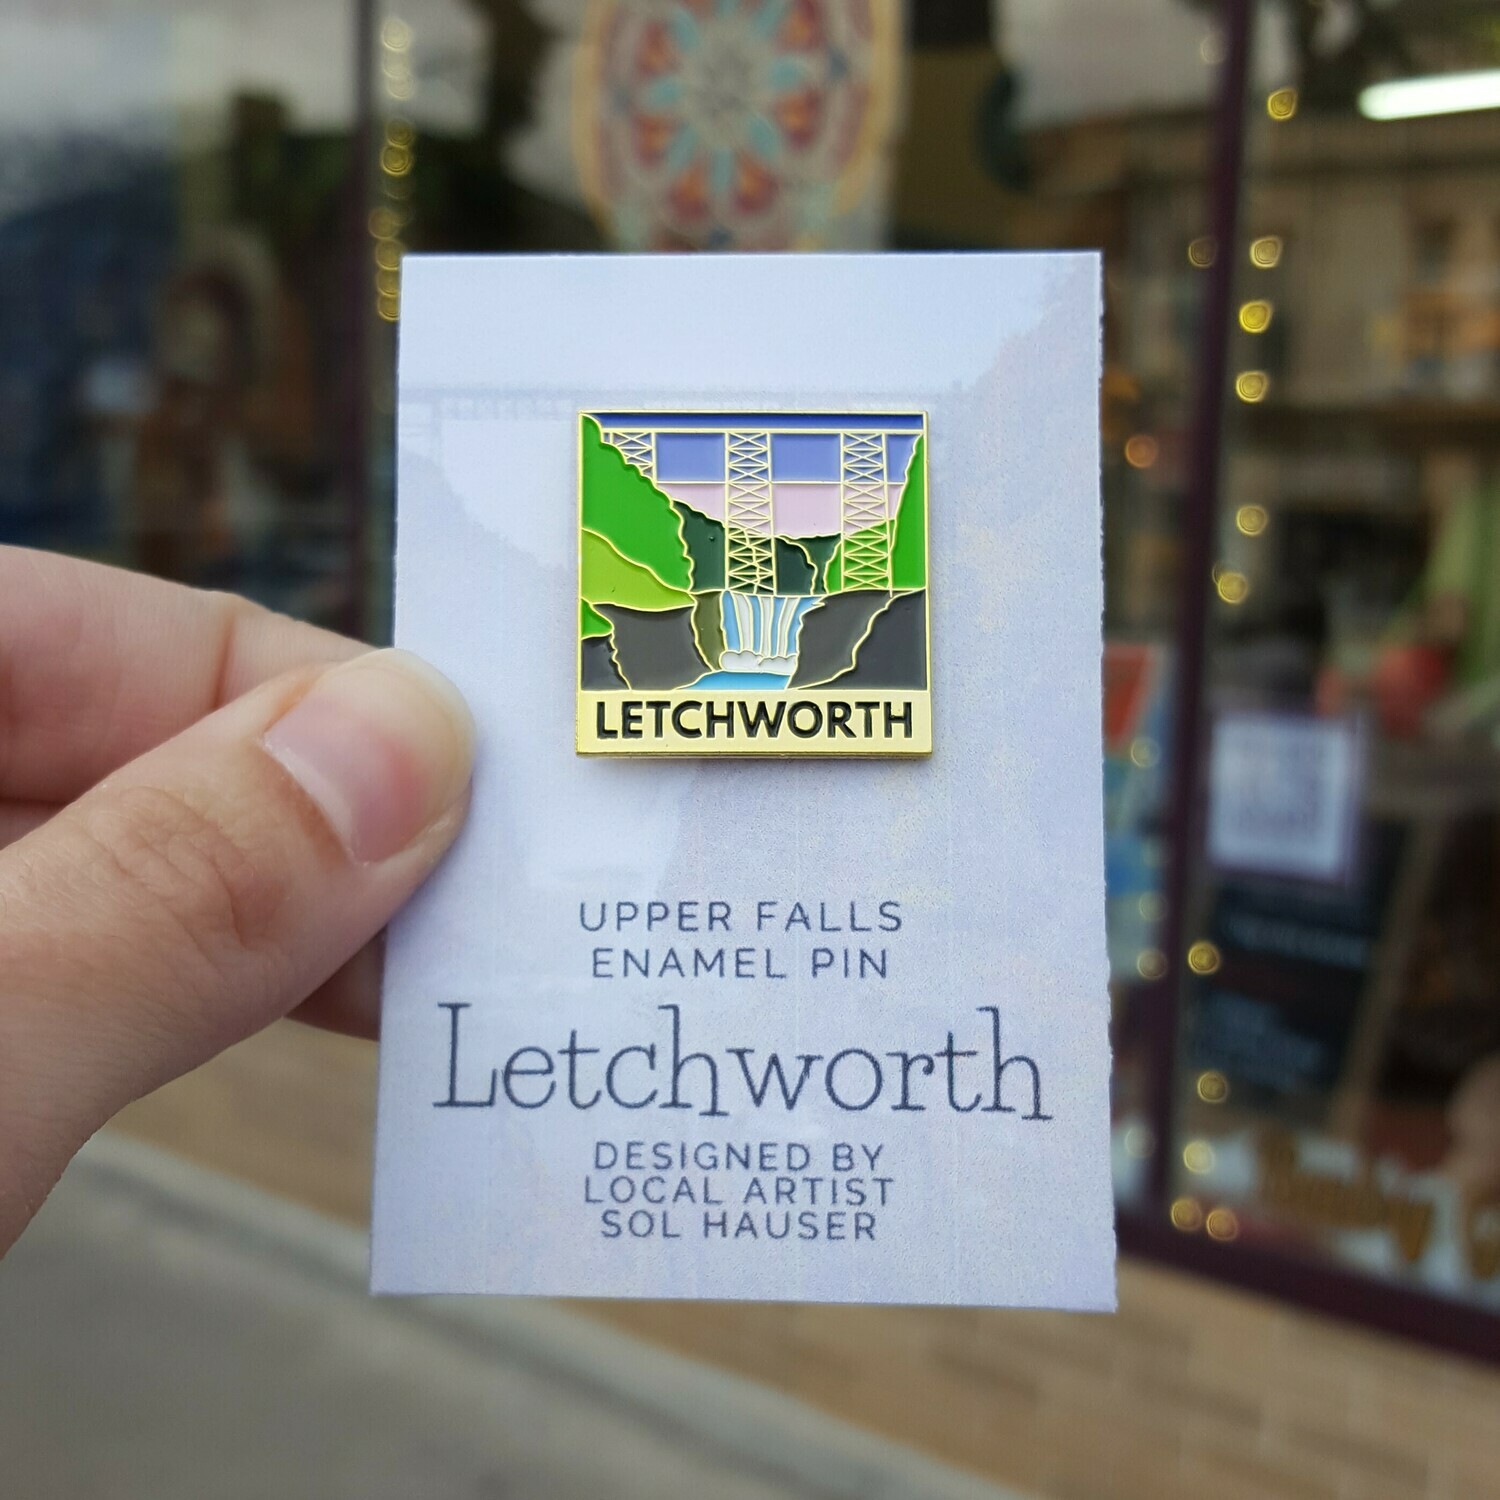 CONS: Letchworth Enamel Pins